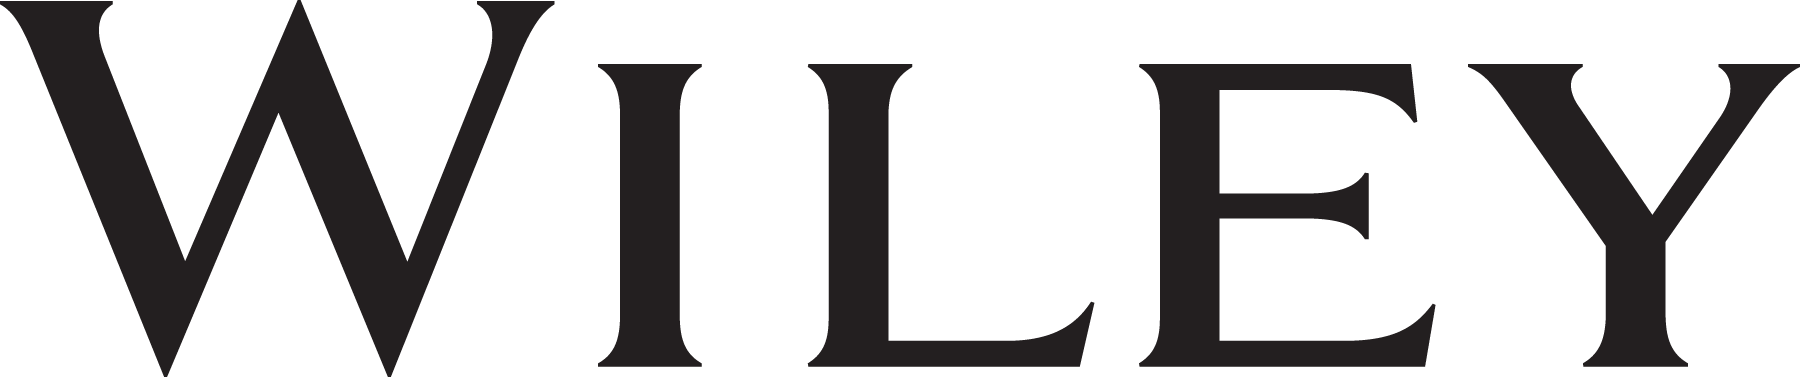 John Wiley and Sons LTD logo